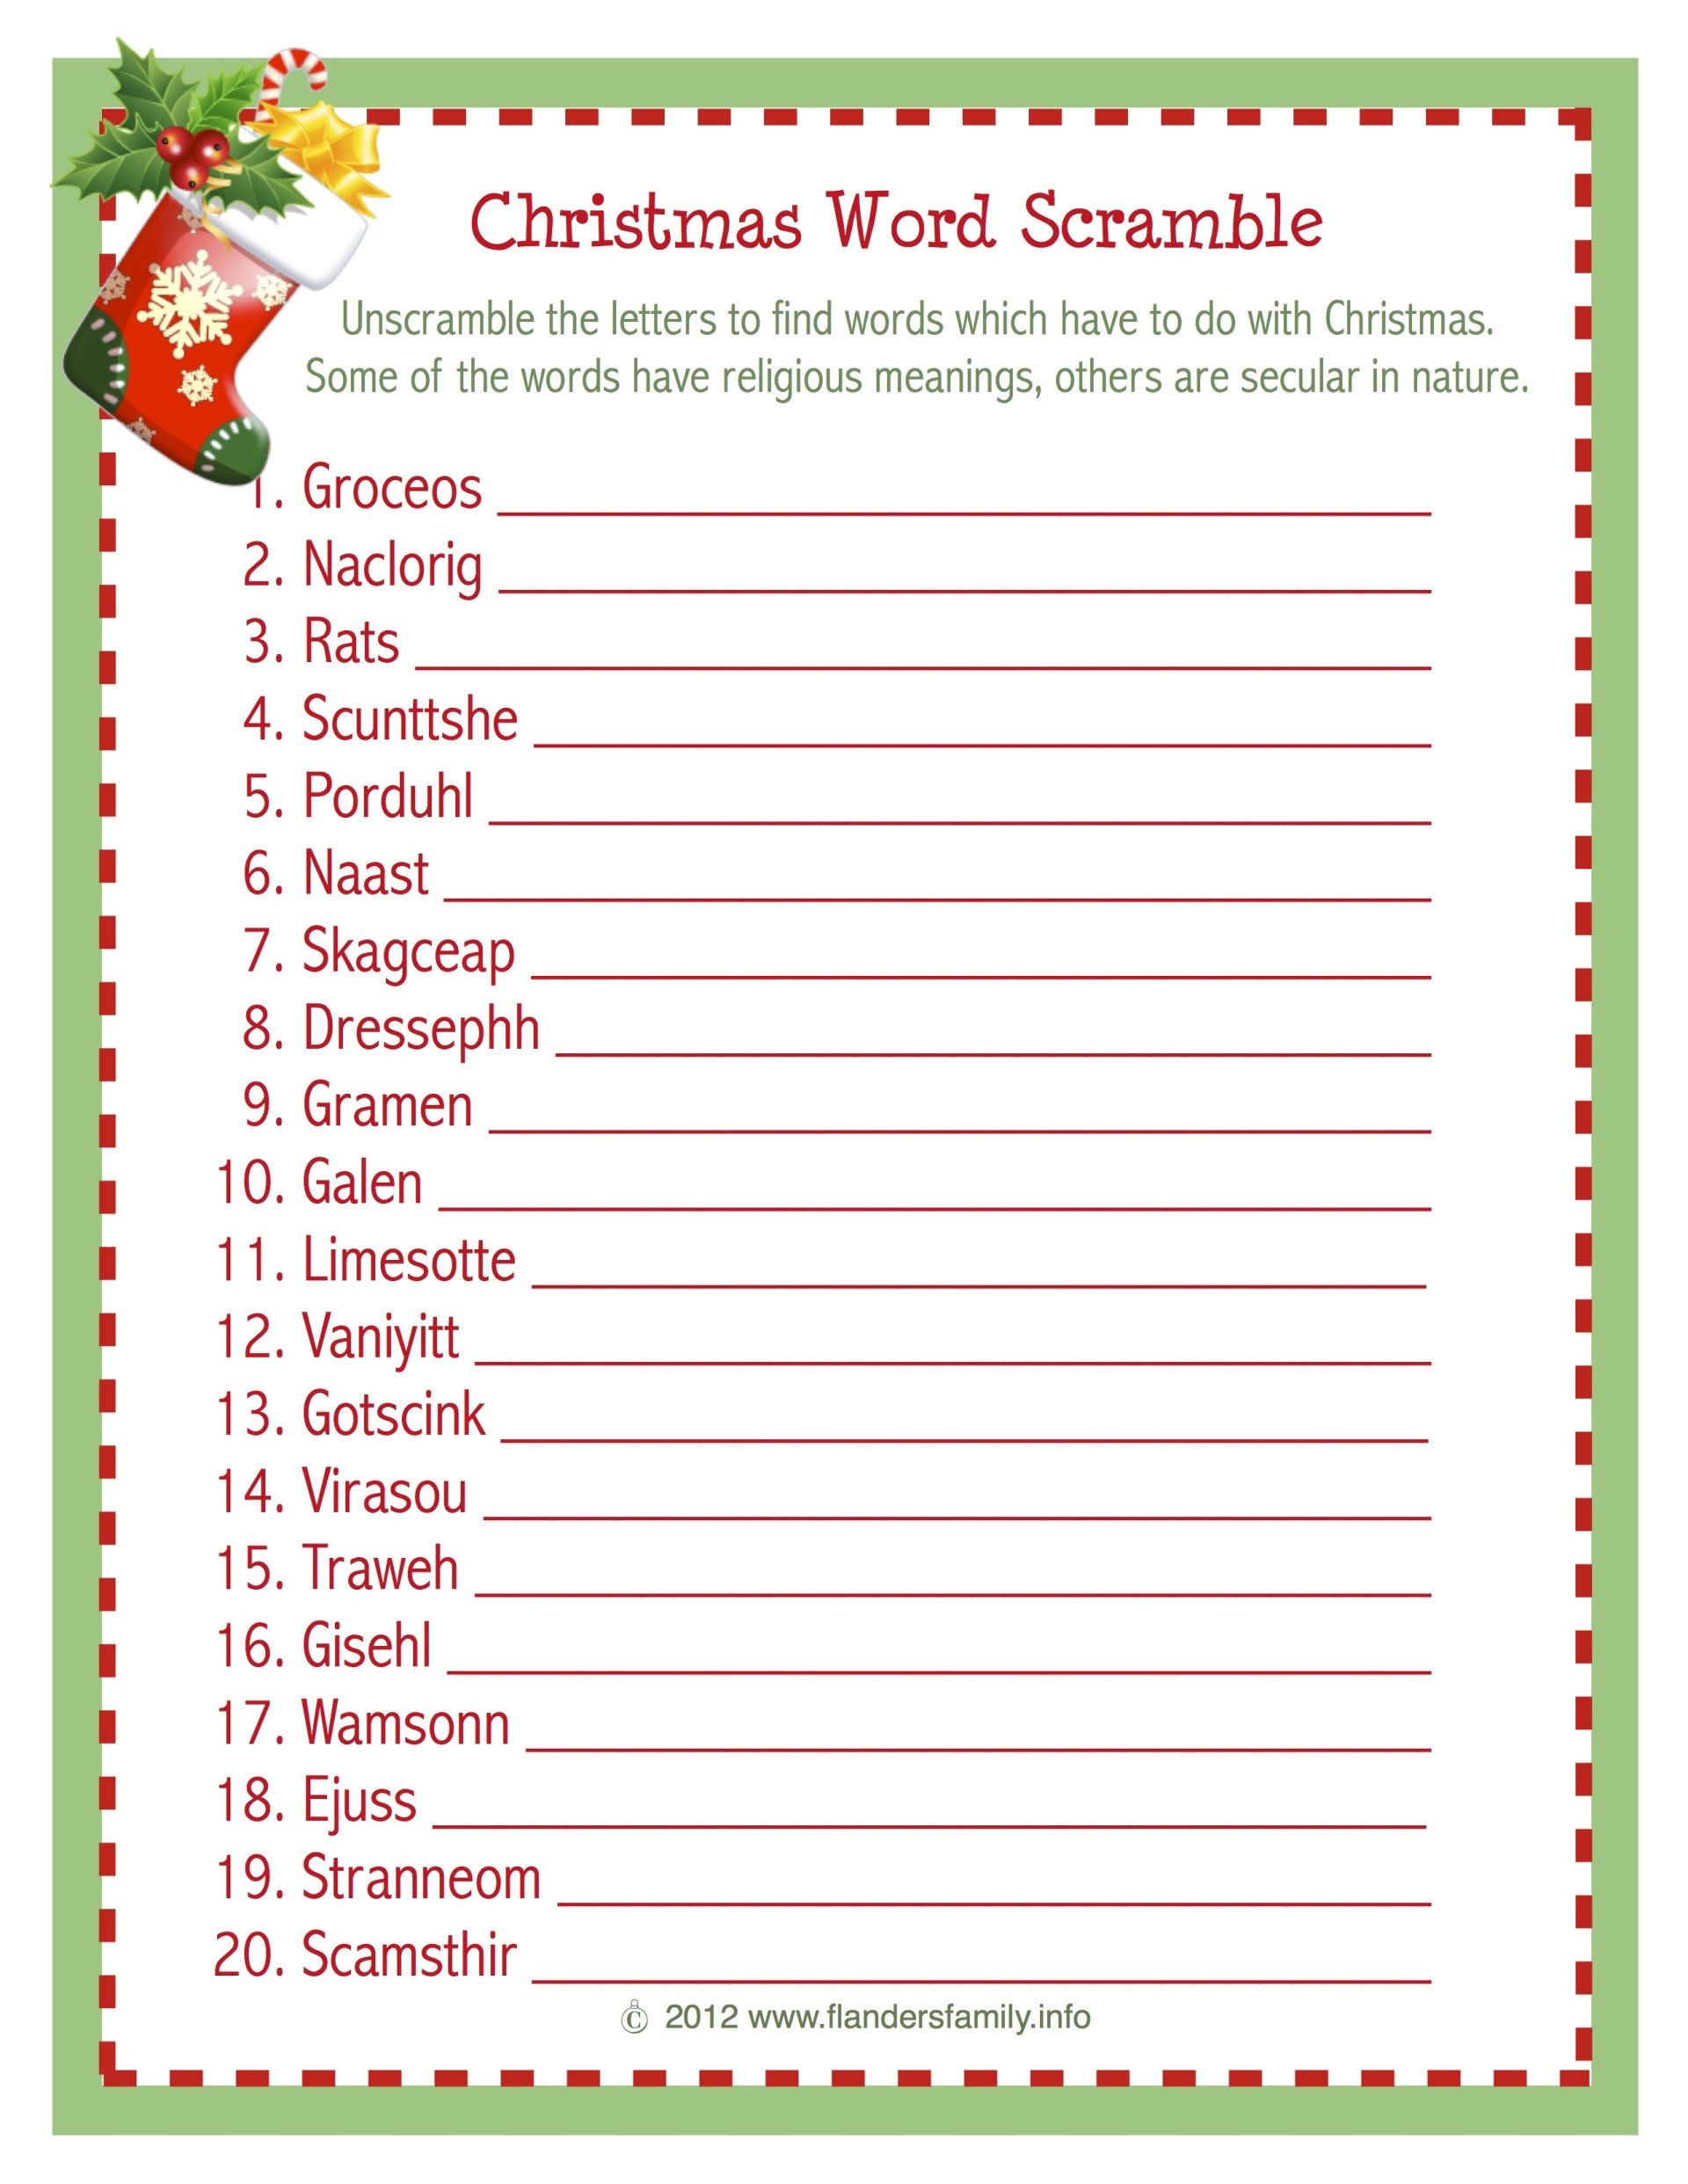 Christmas Word Scramble (Free Printable) | Flanders Family | Group - Christmas Song Scramble Free Printable